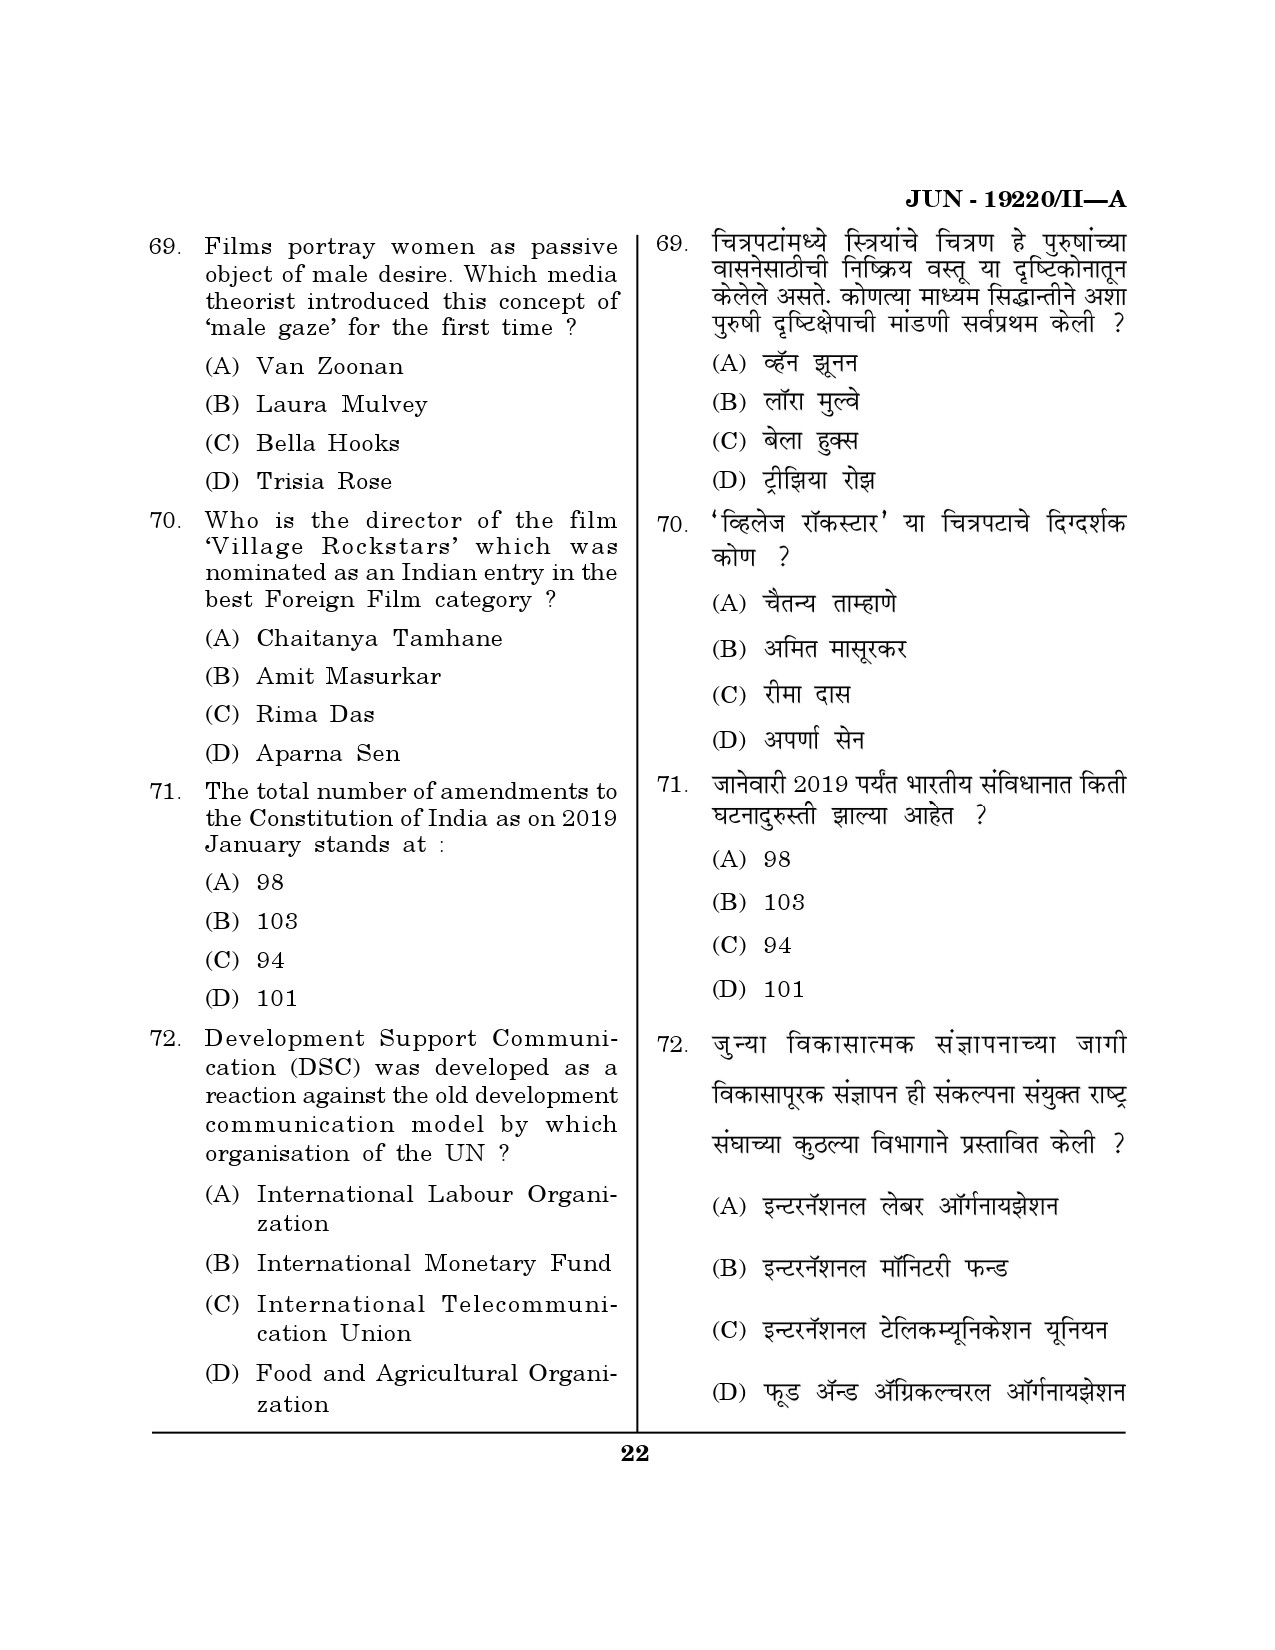 Maharashtra SET Journalism and Mass Communication Question Paper II June 2020 21